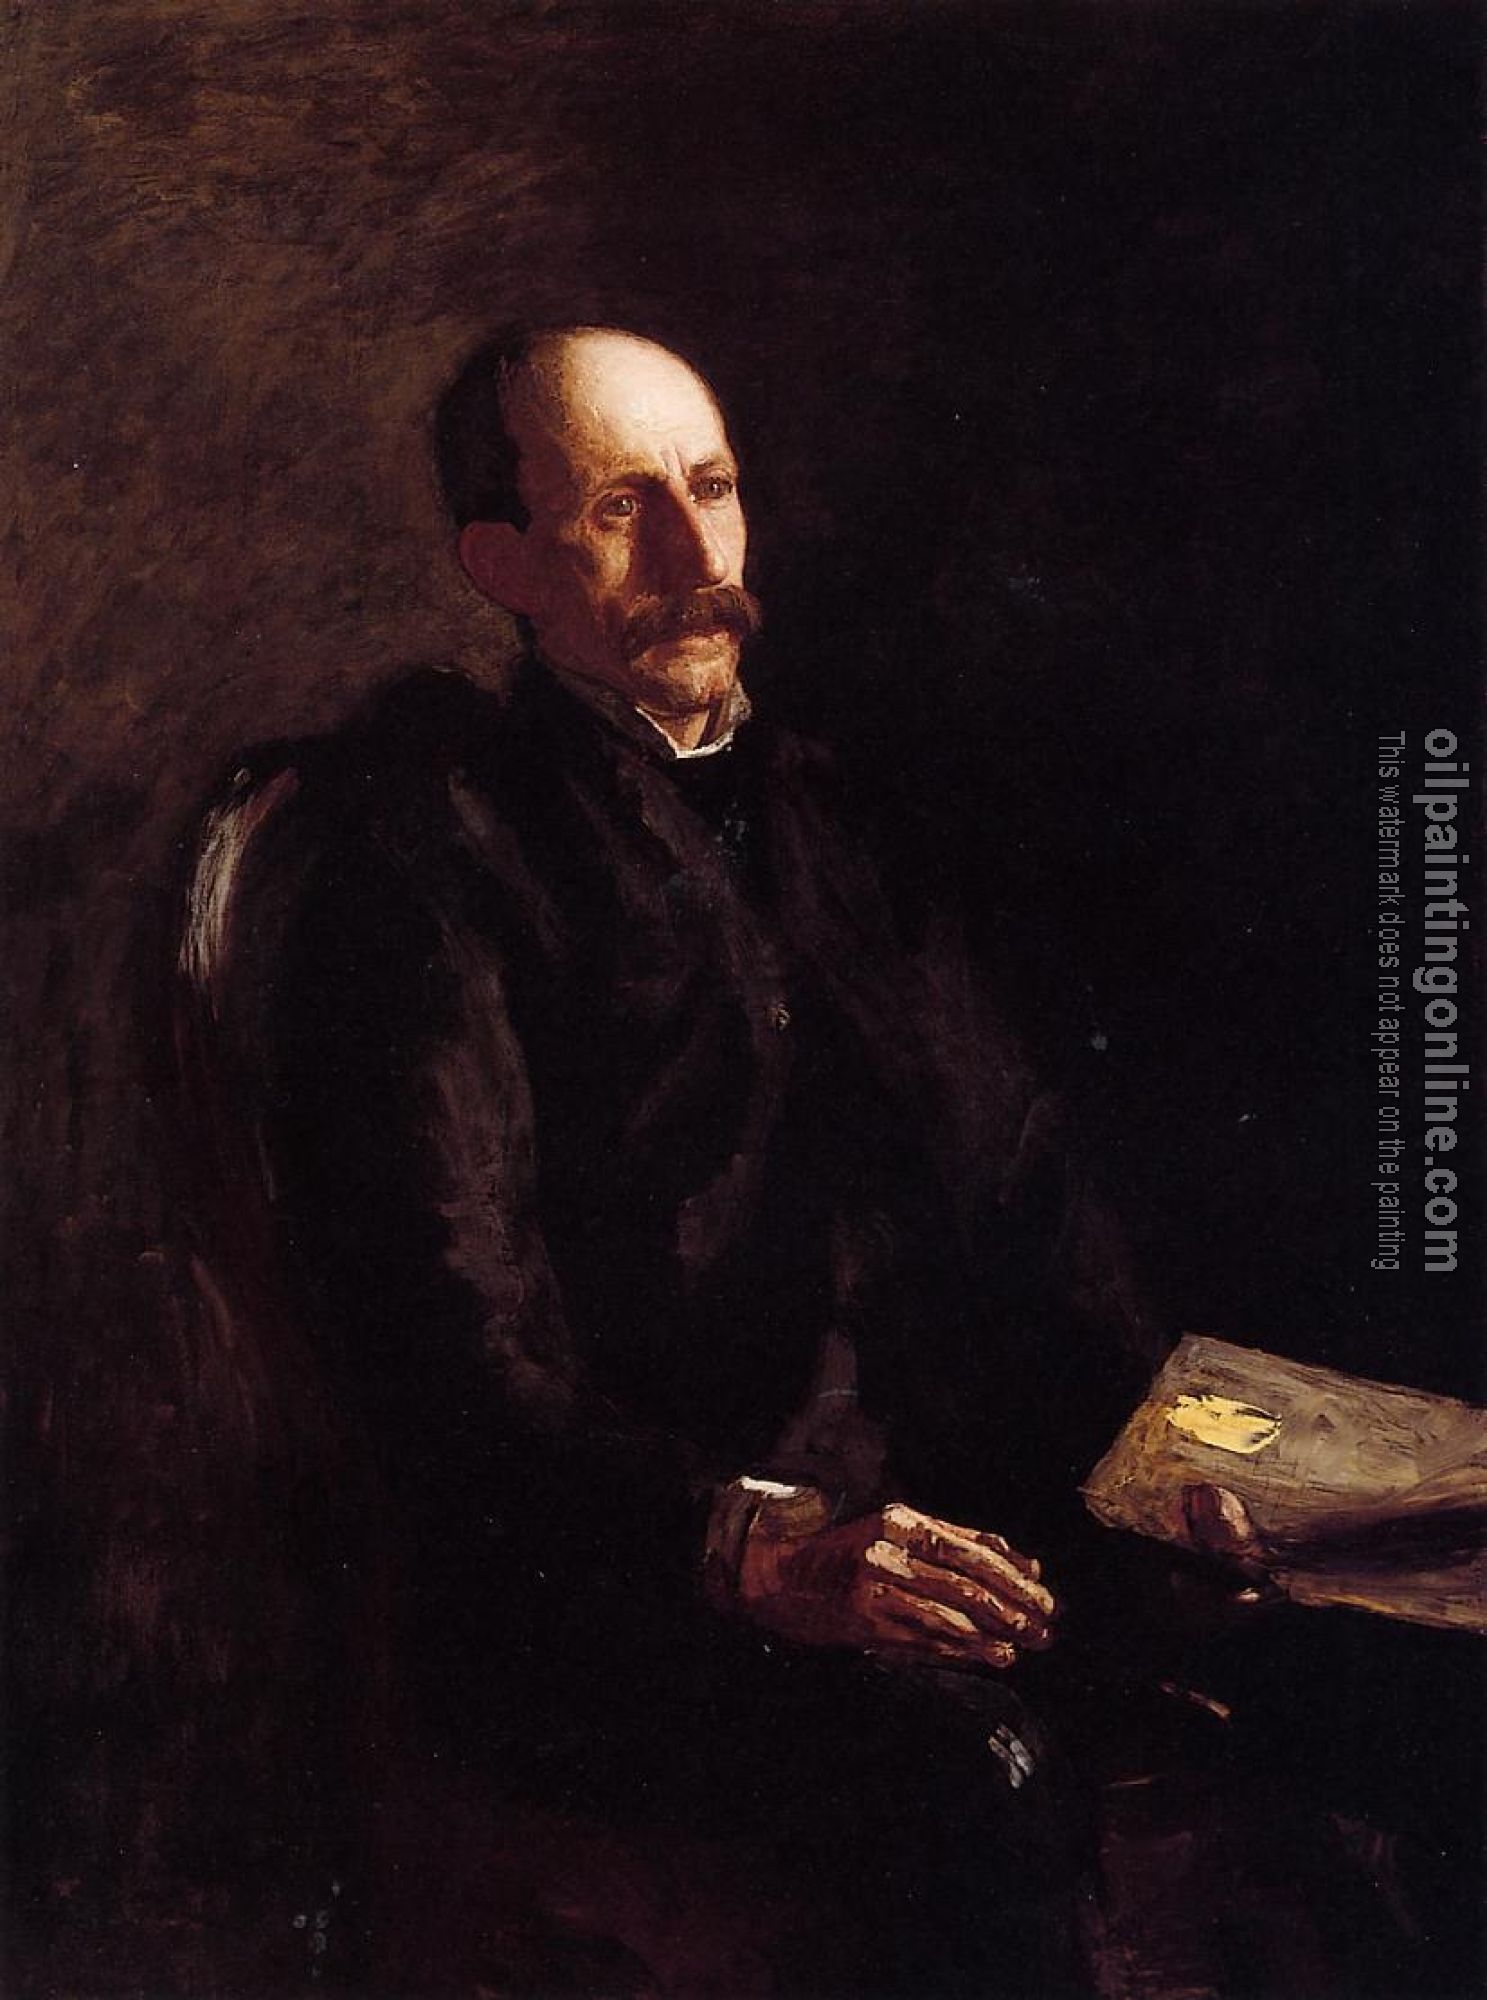 Eakins, Thomas - Portrait of Charles Linford, the Artist